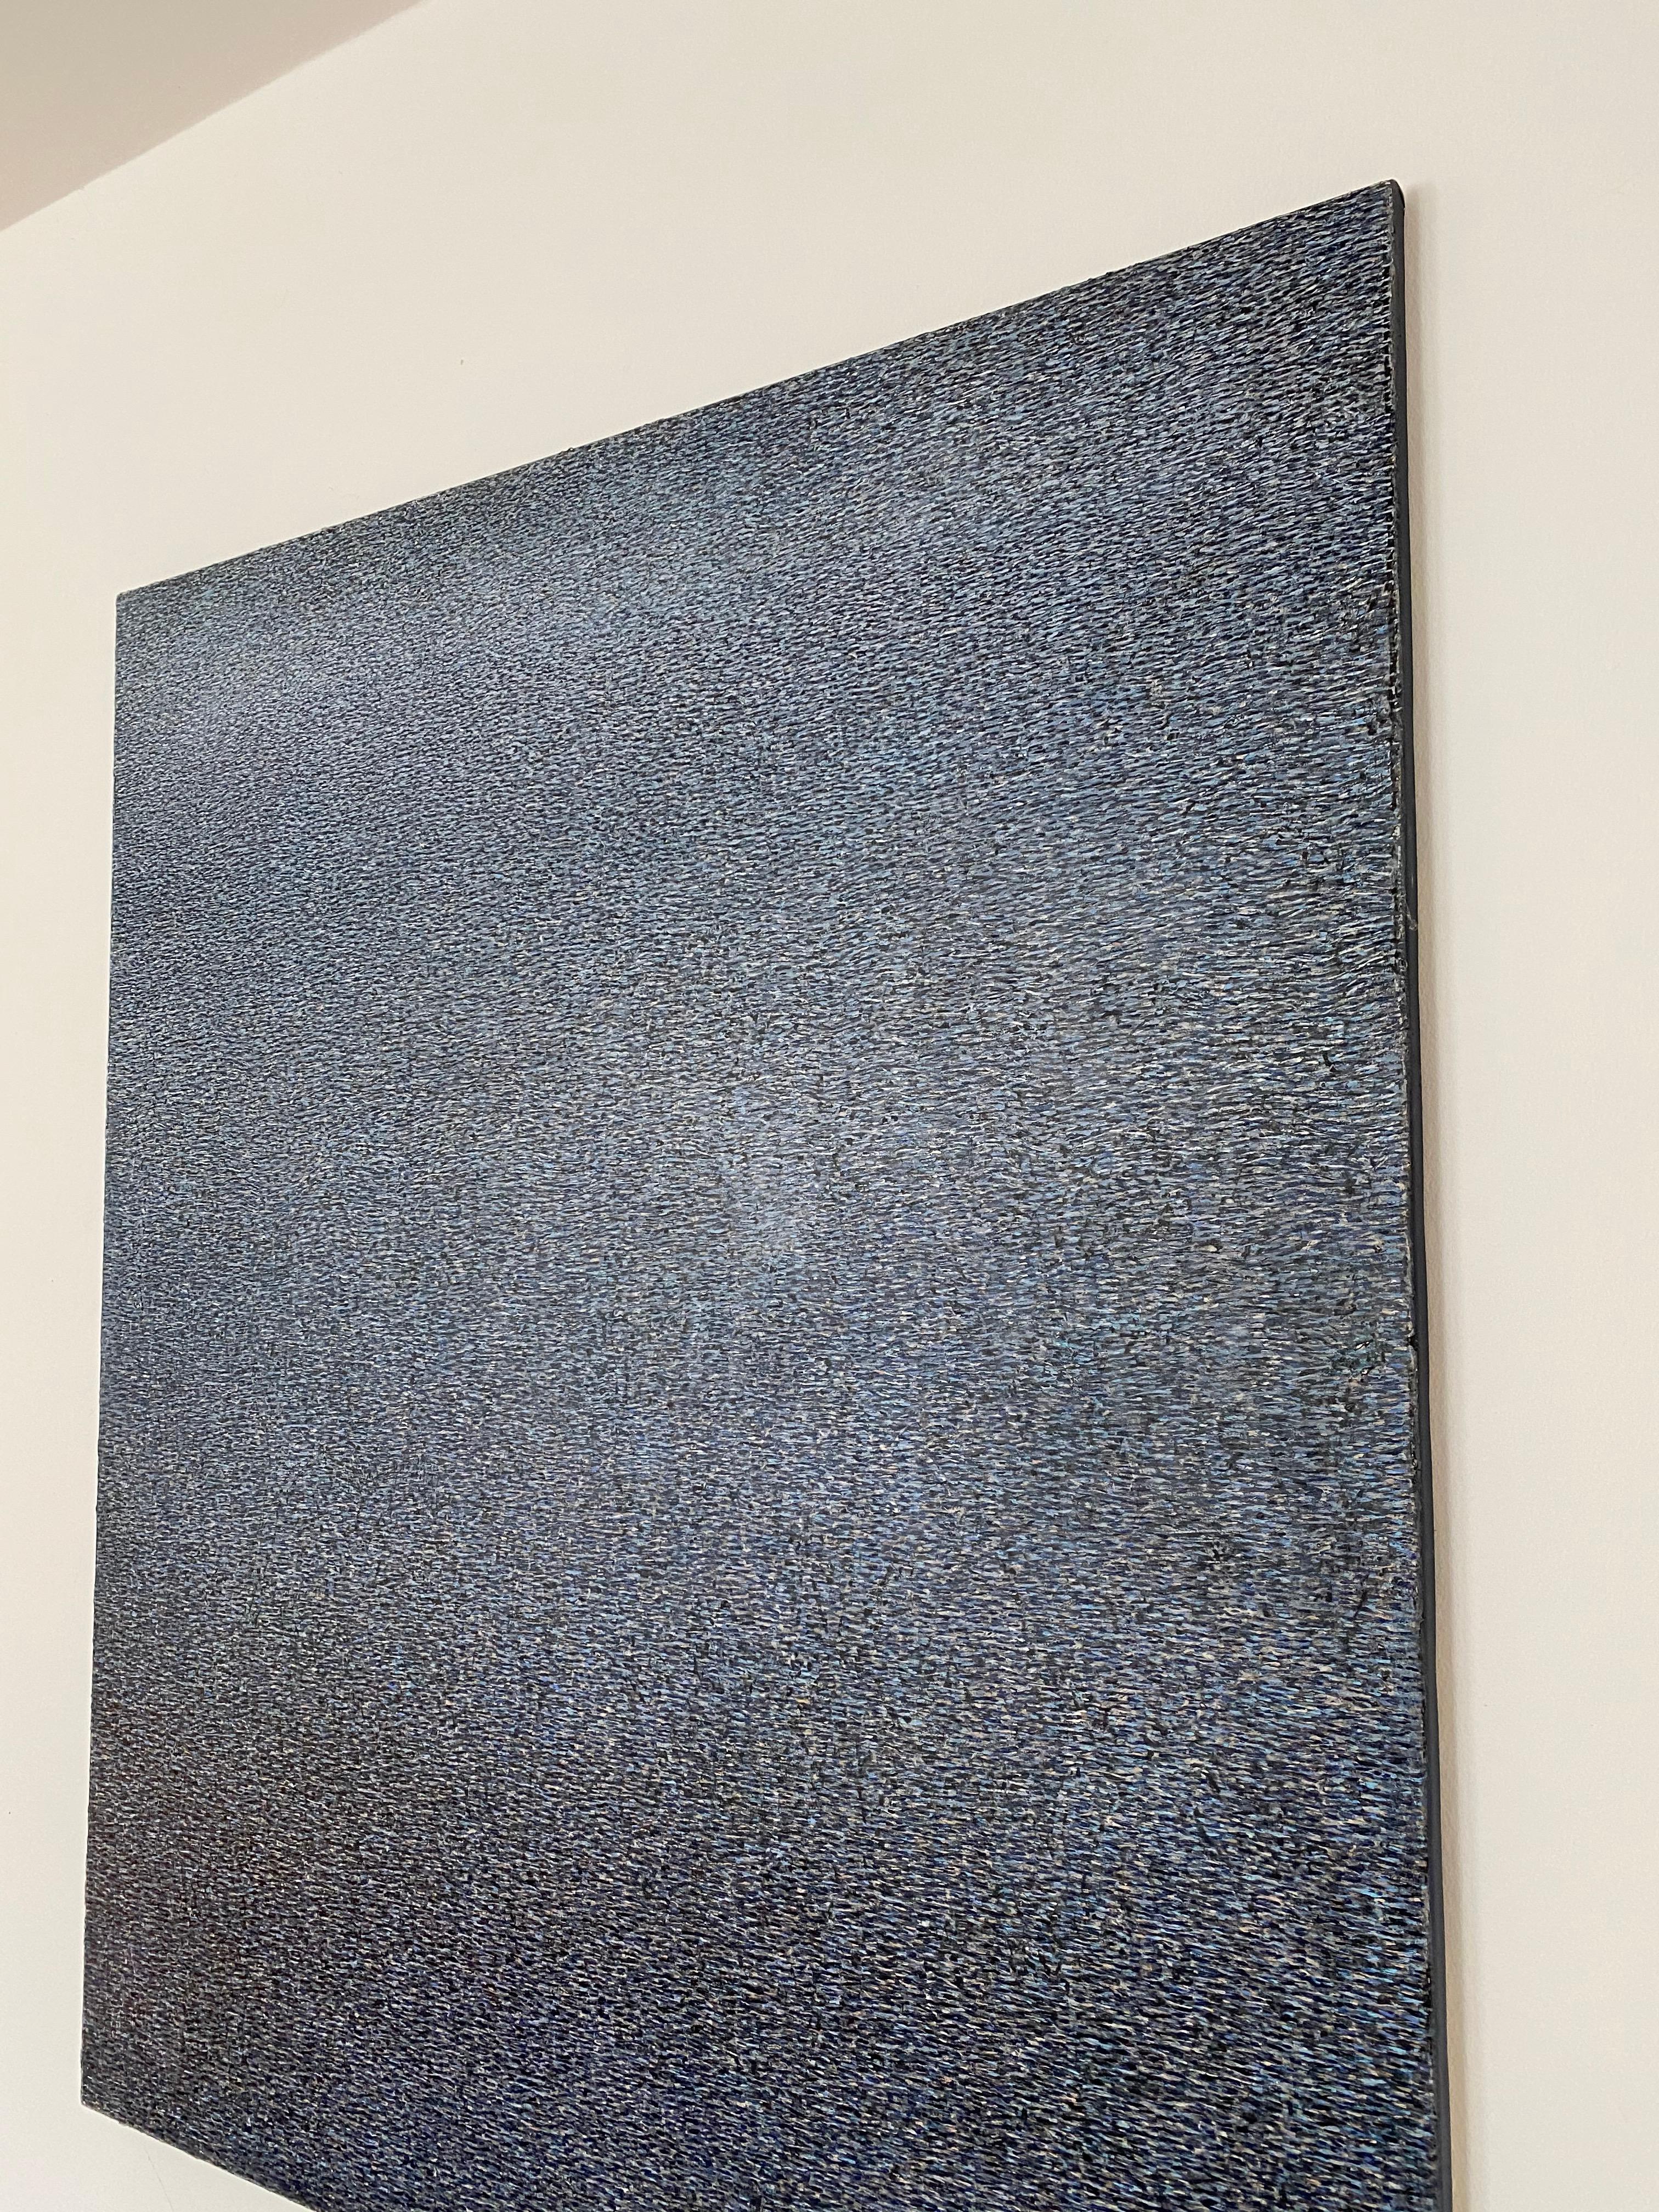 North Sea - Ultramarine Blue, Contemporary Conceptual, Minimalistic Oil Painting For Sale 1